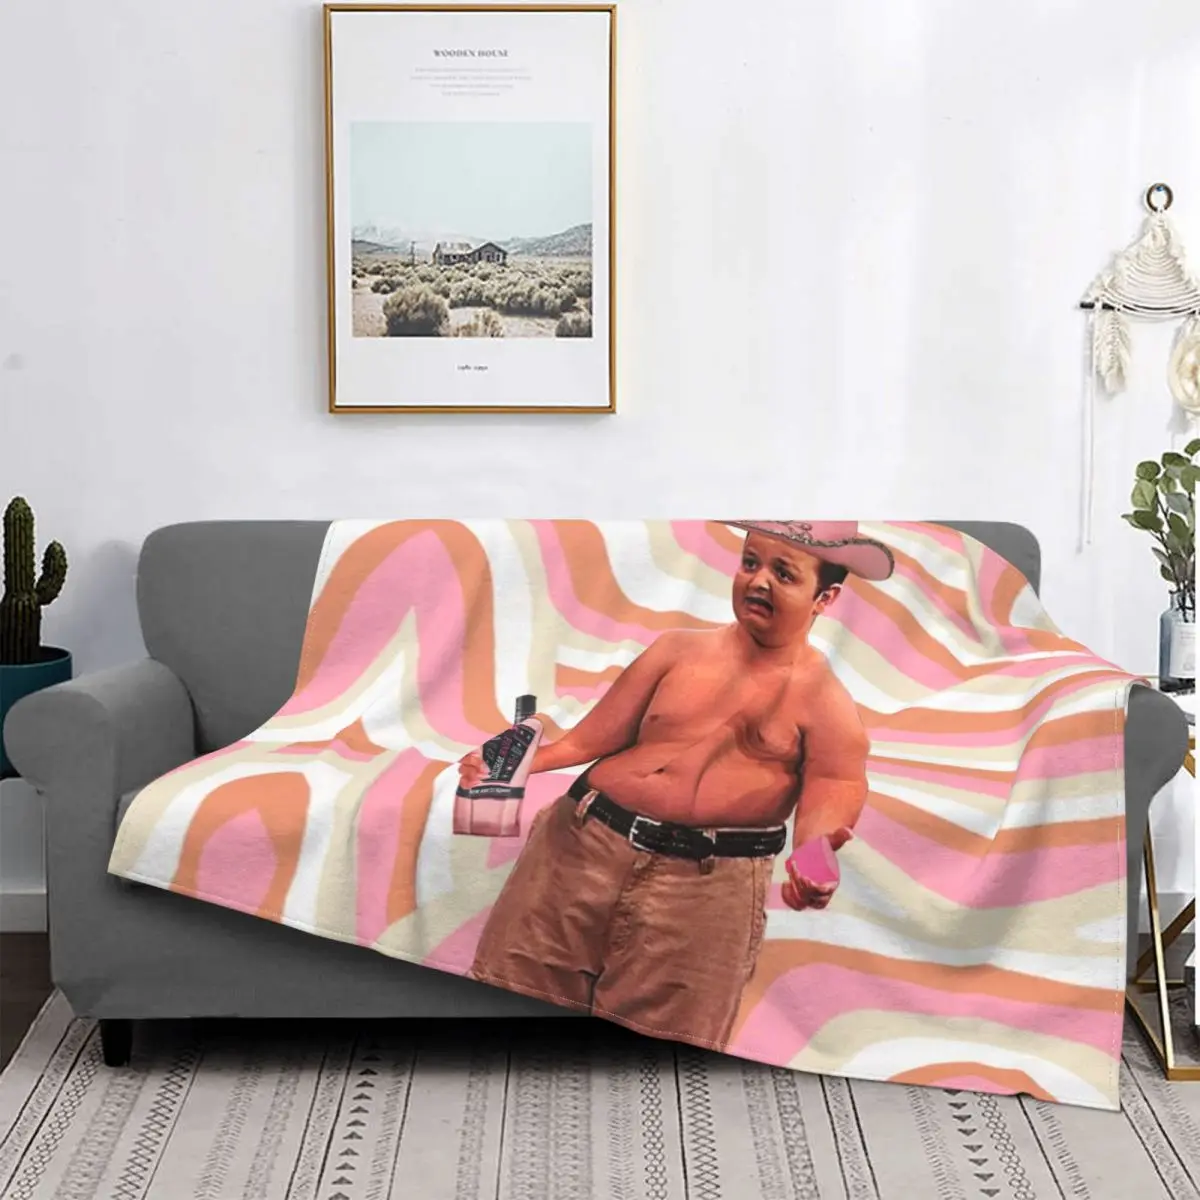 

Gibby Pink Whitney Blanket Warm Fleece Soft Flannel Humor Icarly Meme Throw Blankets for Bedroom Sofa Office Autumn